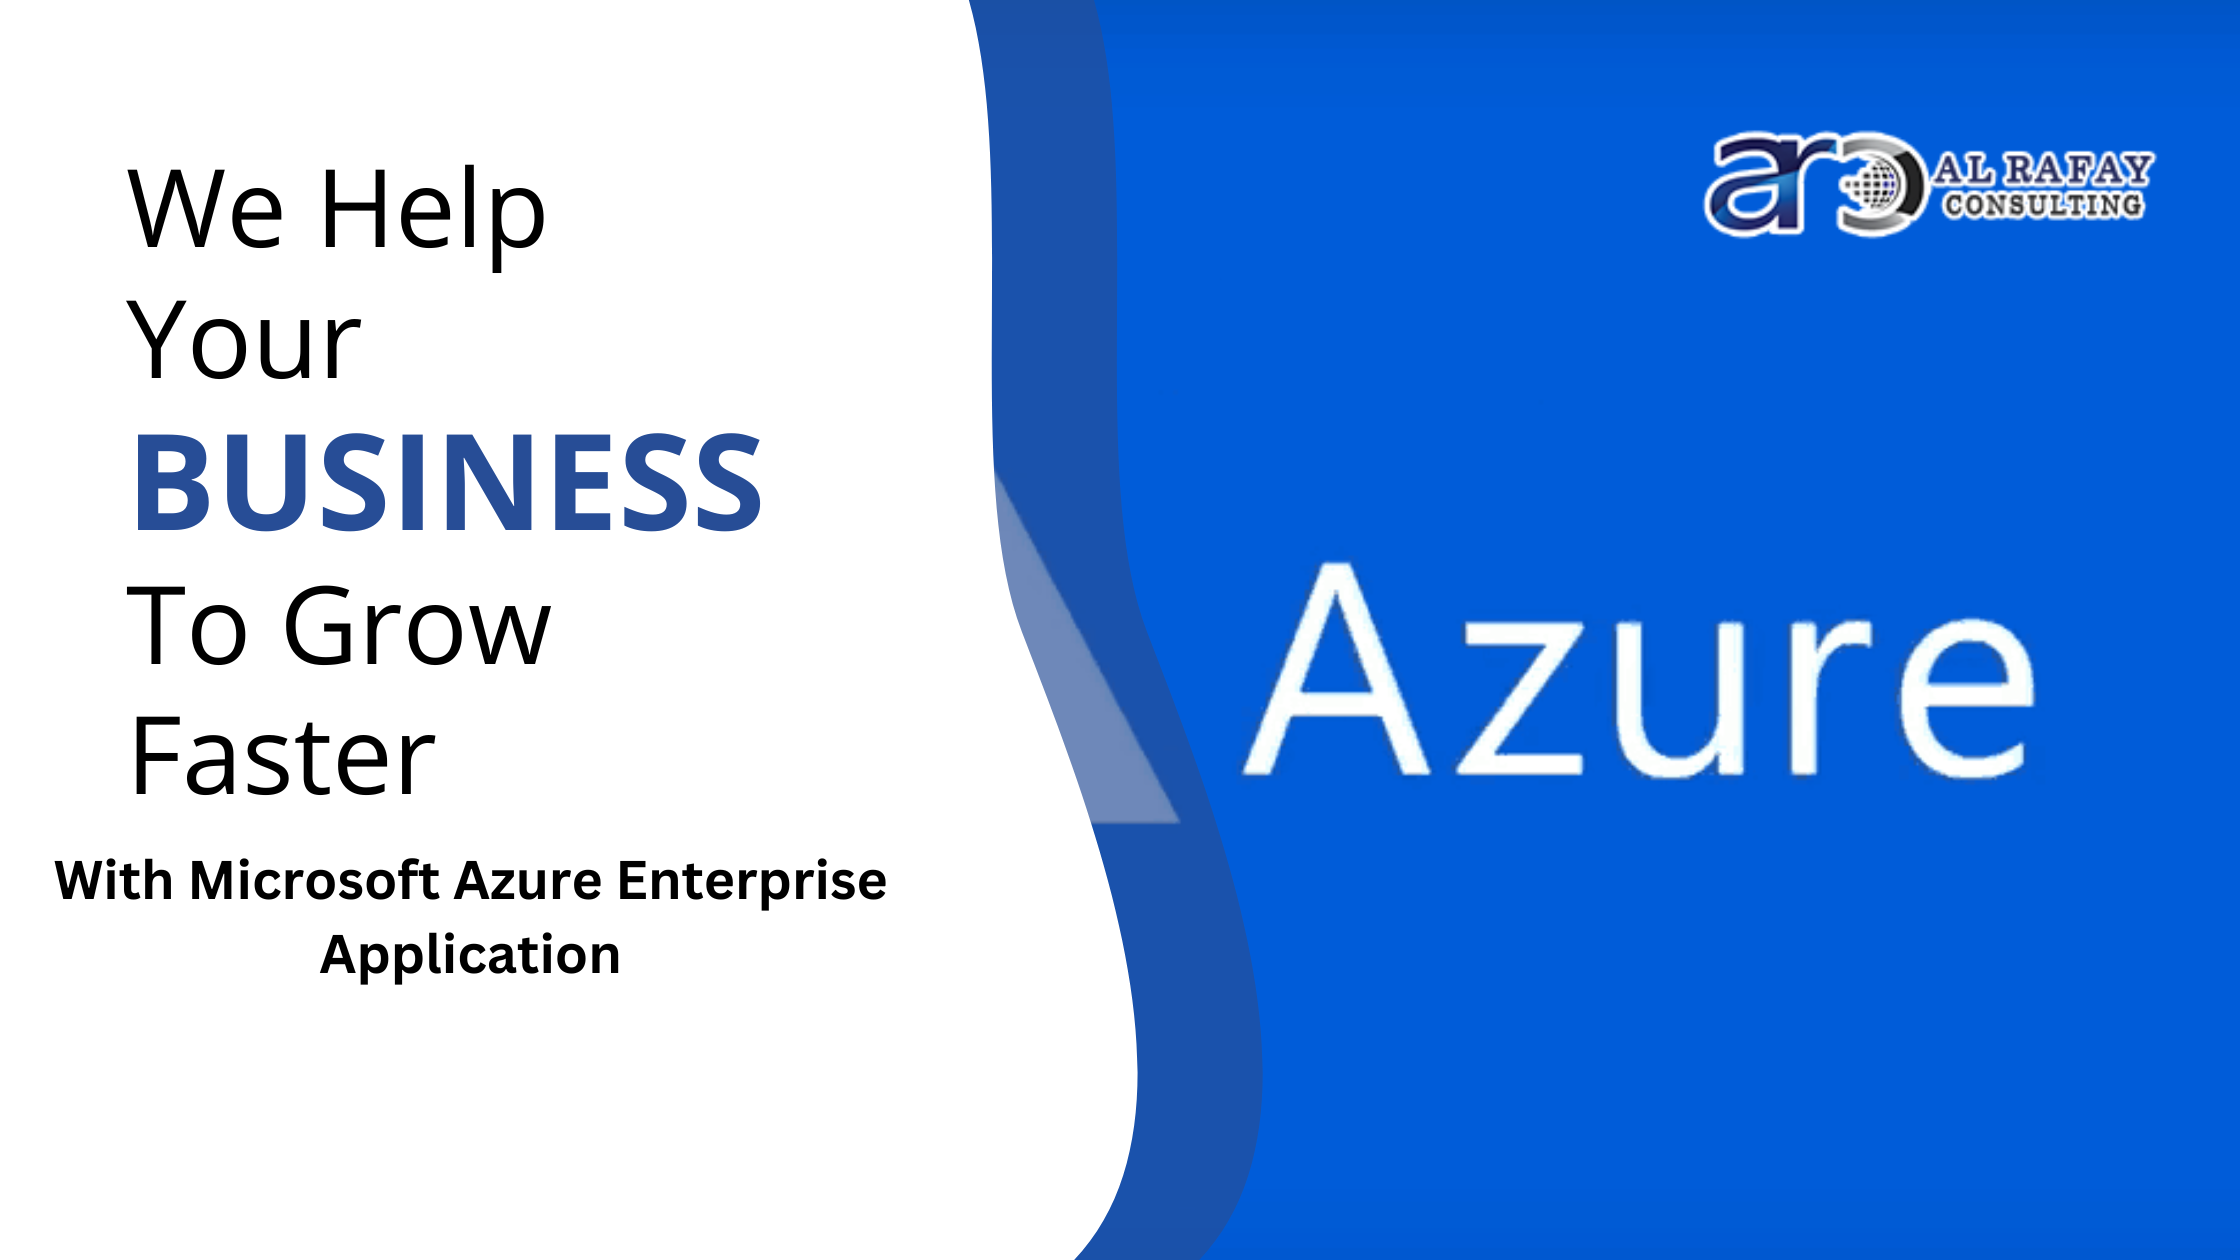 The Reason you should choose Microsoft Azure Enterprise Application